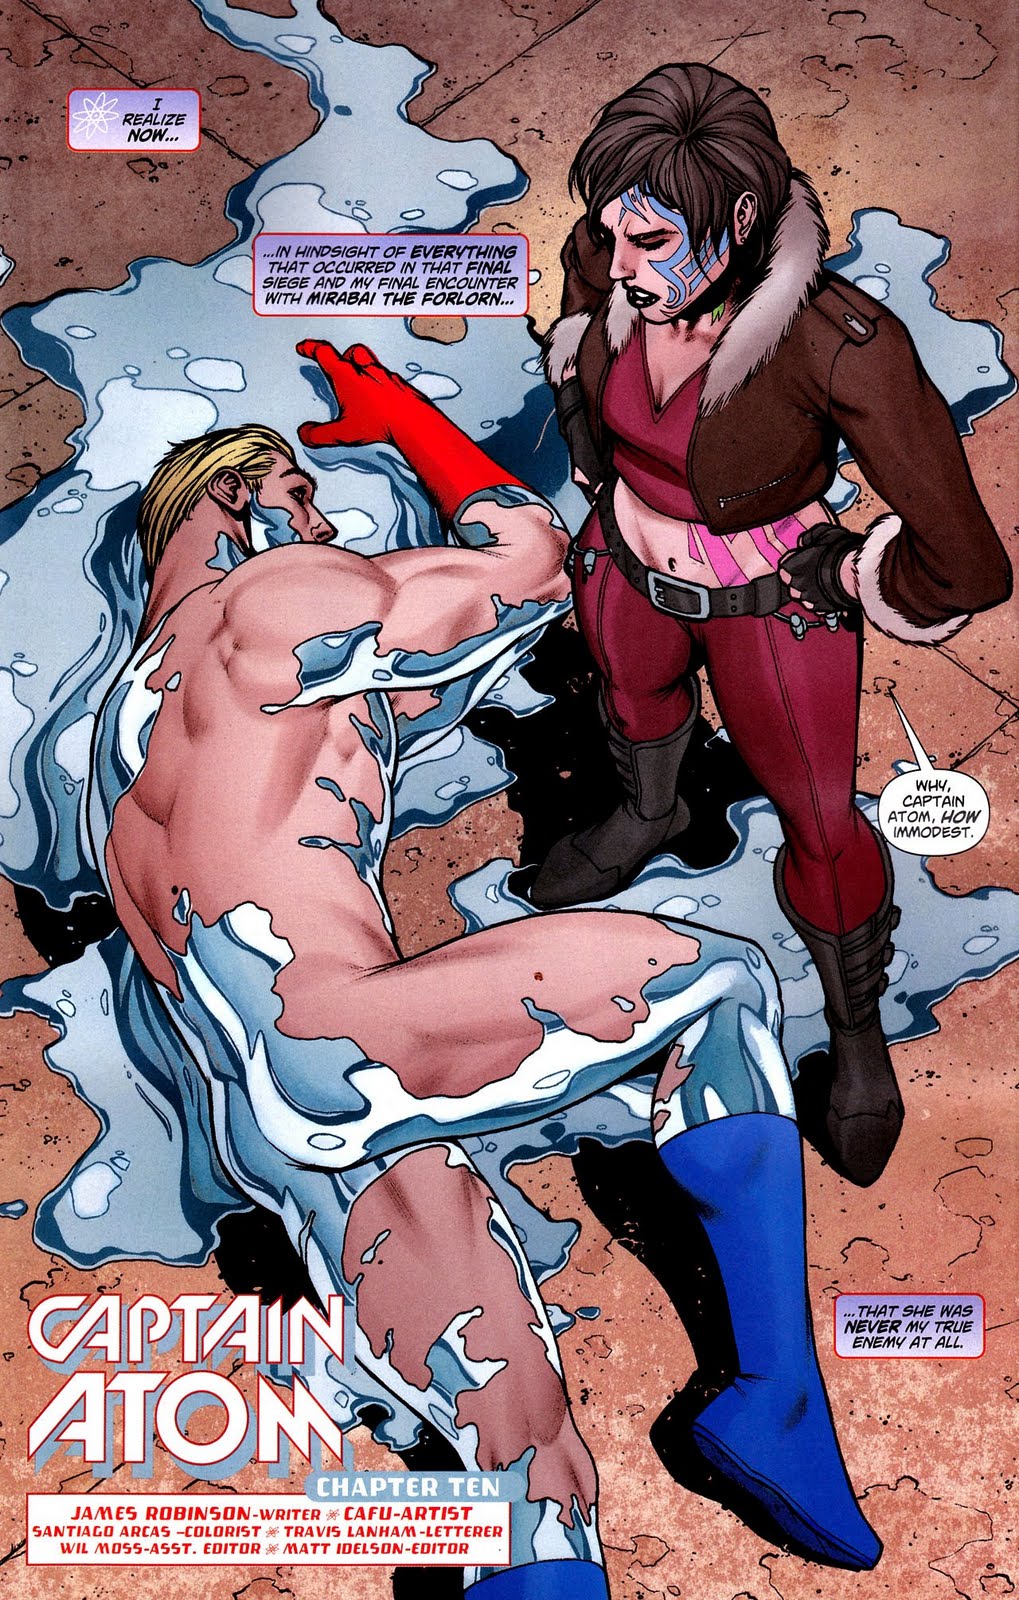 Shirtless Superheroes: Naked Captain Atom